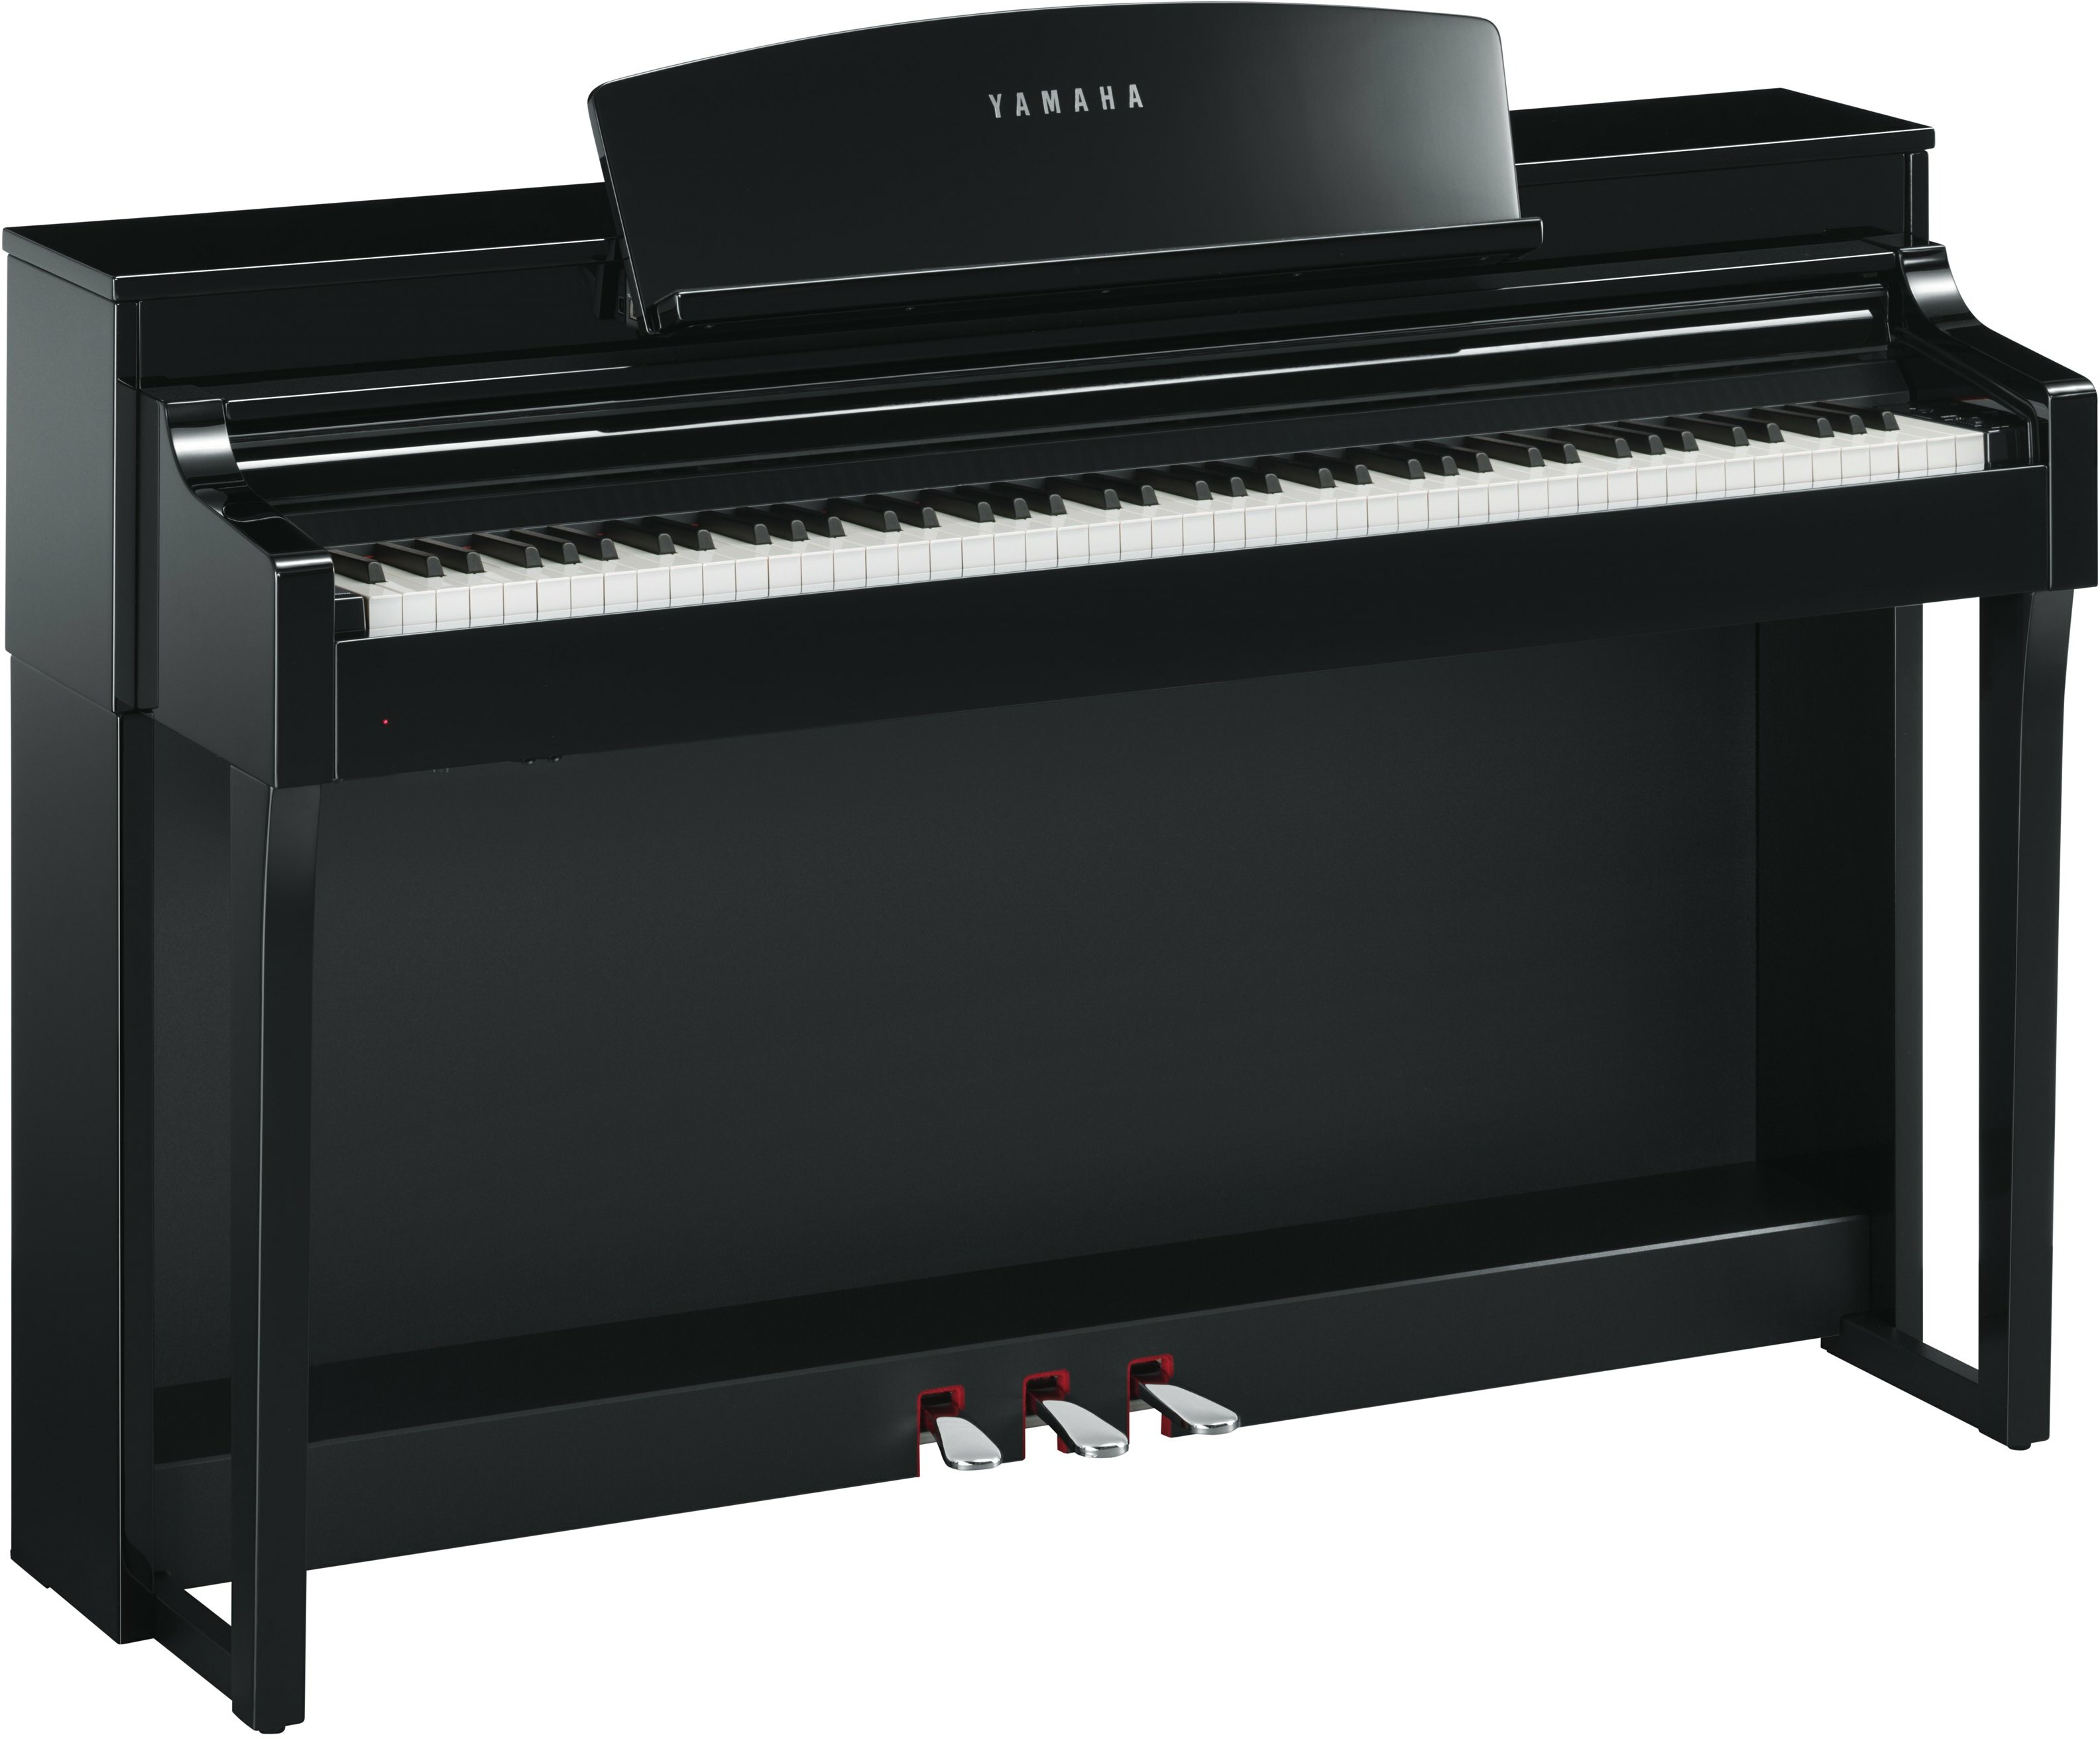 Yamaha Csp150 - Polished Ebony - Piano digital con mueble - Main picture